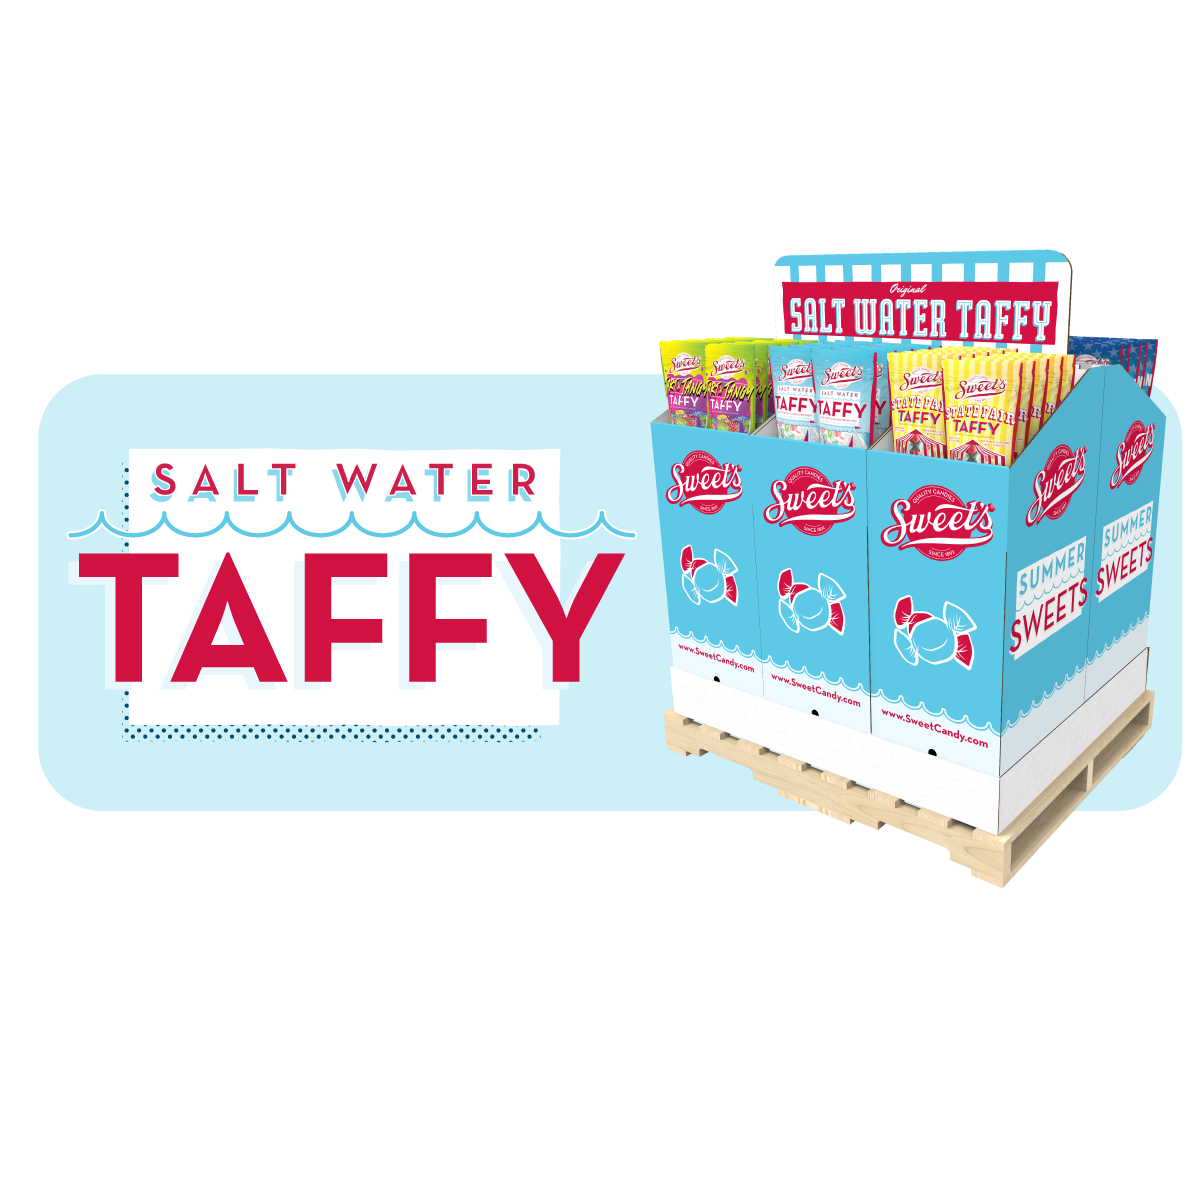 Salt Water Taffy - 12oz Bagged Taffy Display by Sweet Candy Company